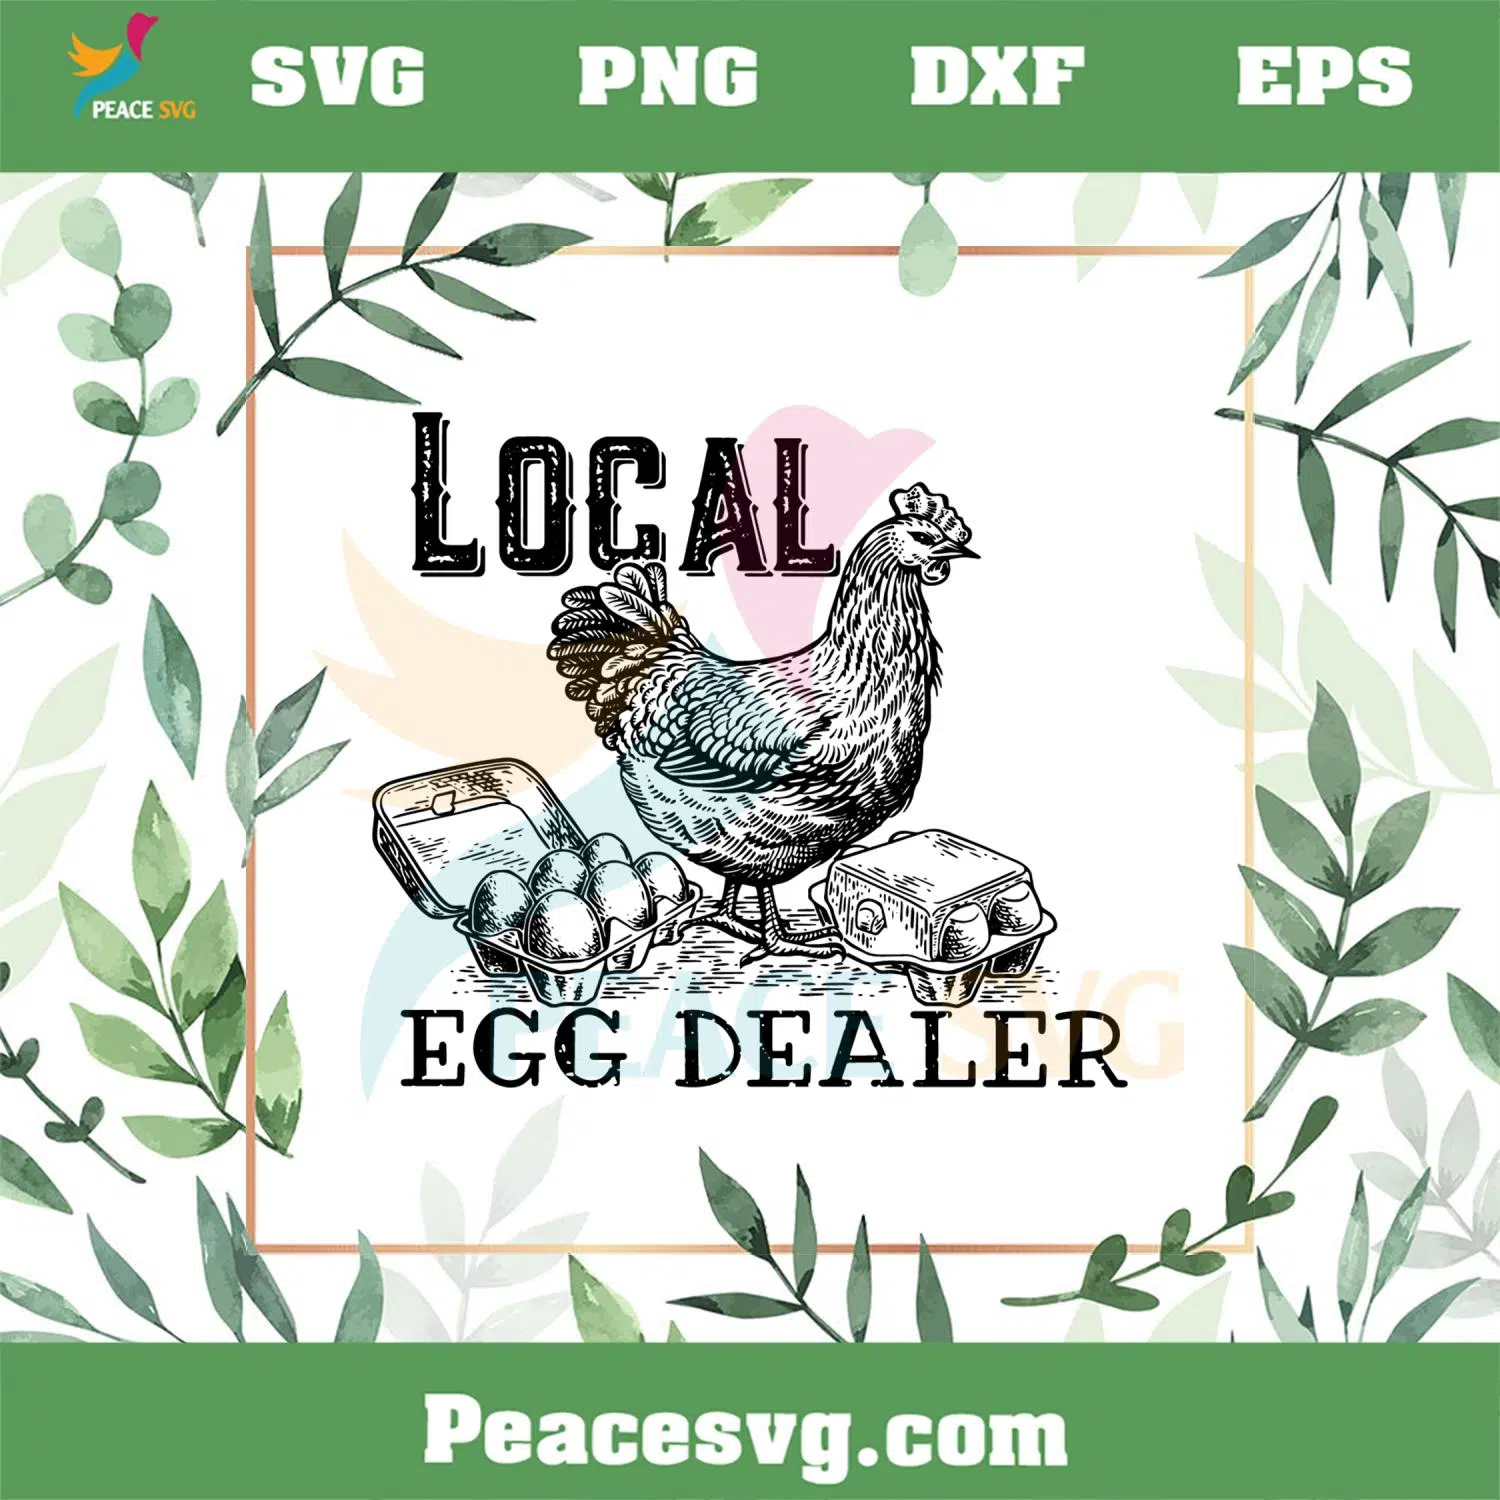 Egg Dealer Easter Christian Easter Chicken SVG Cutting Files